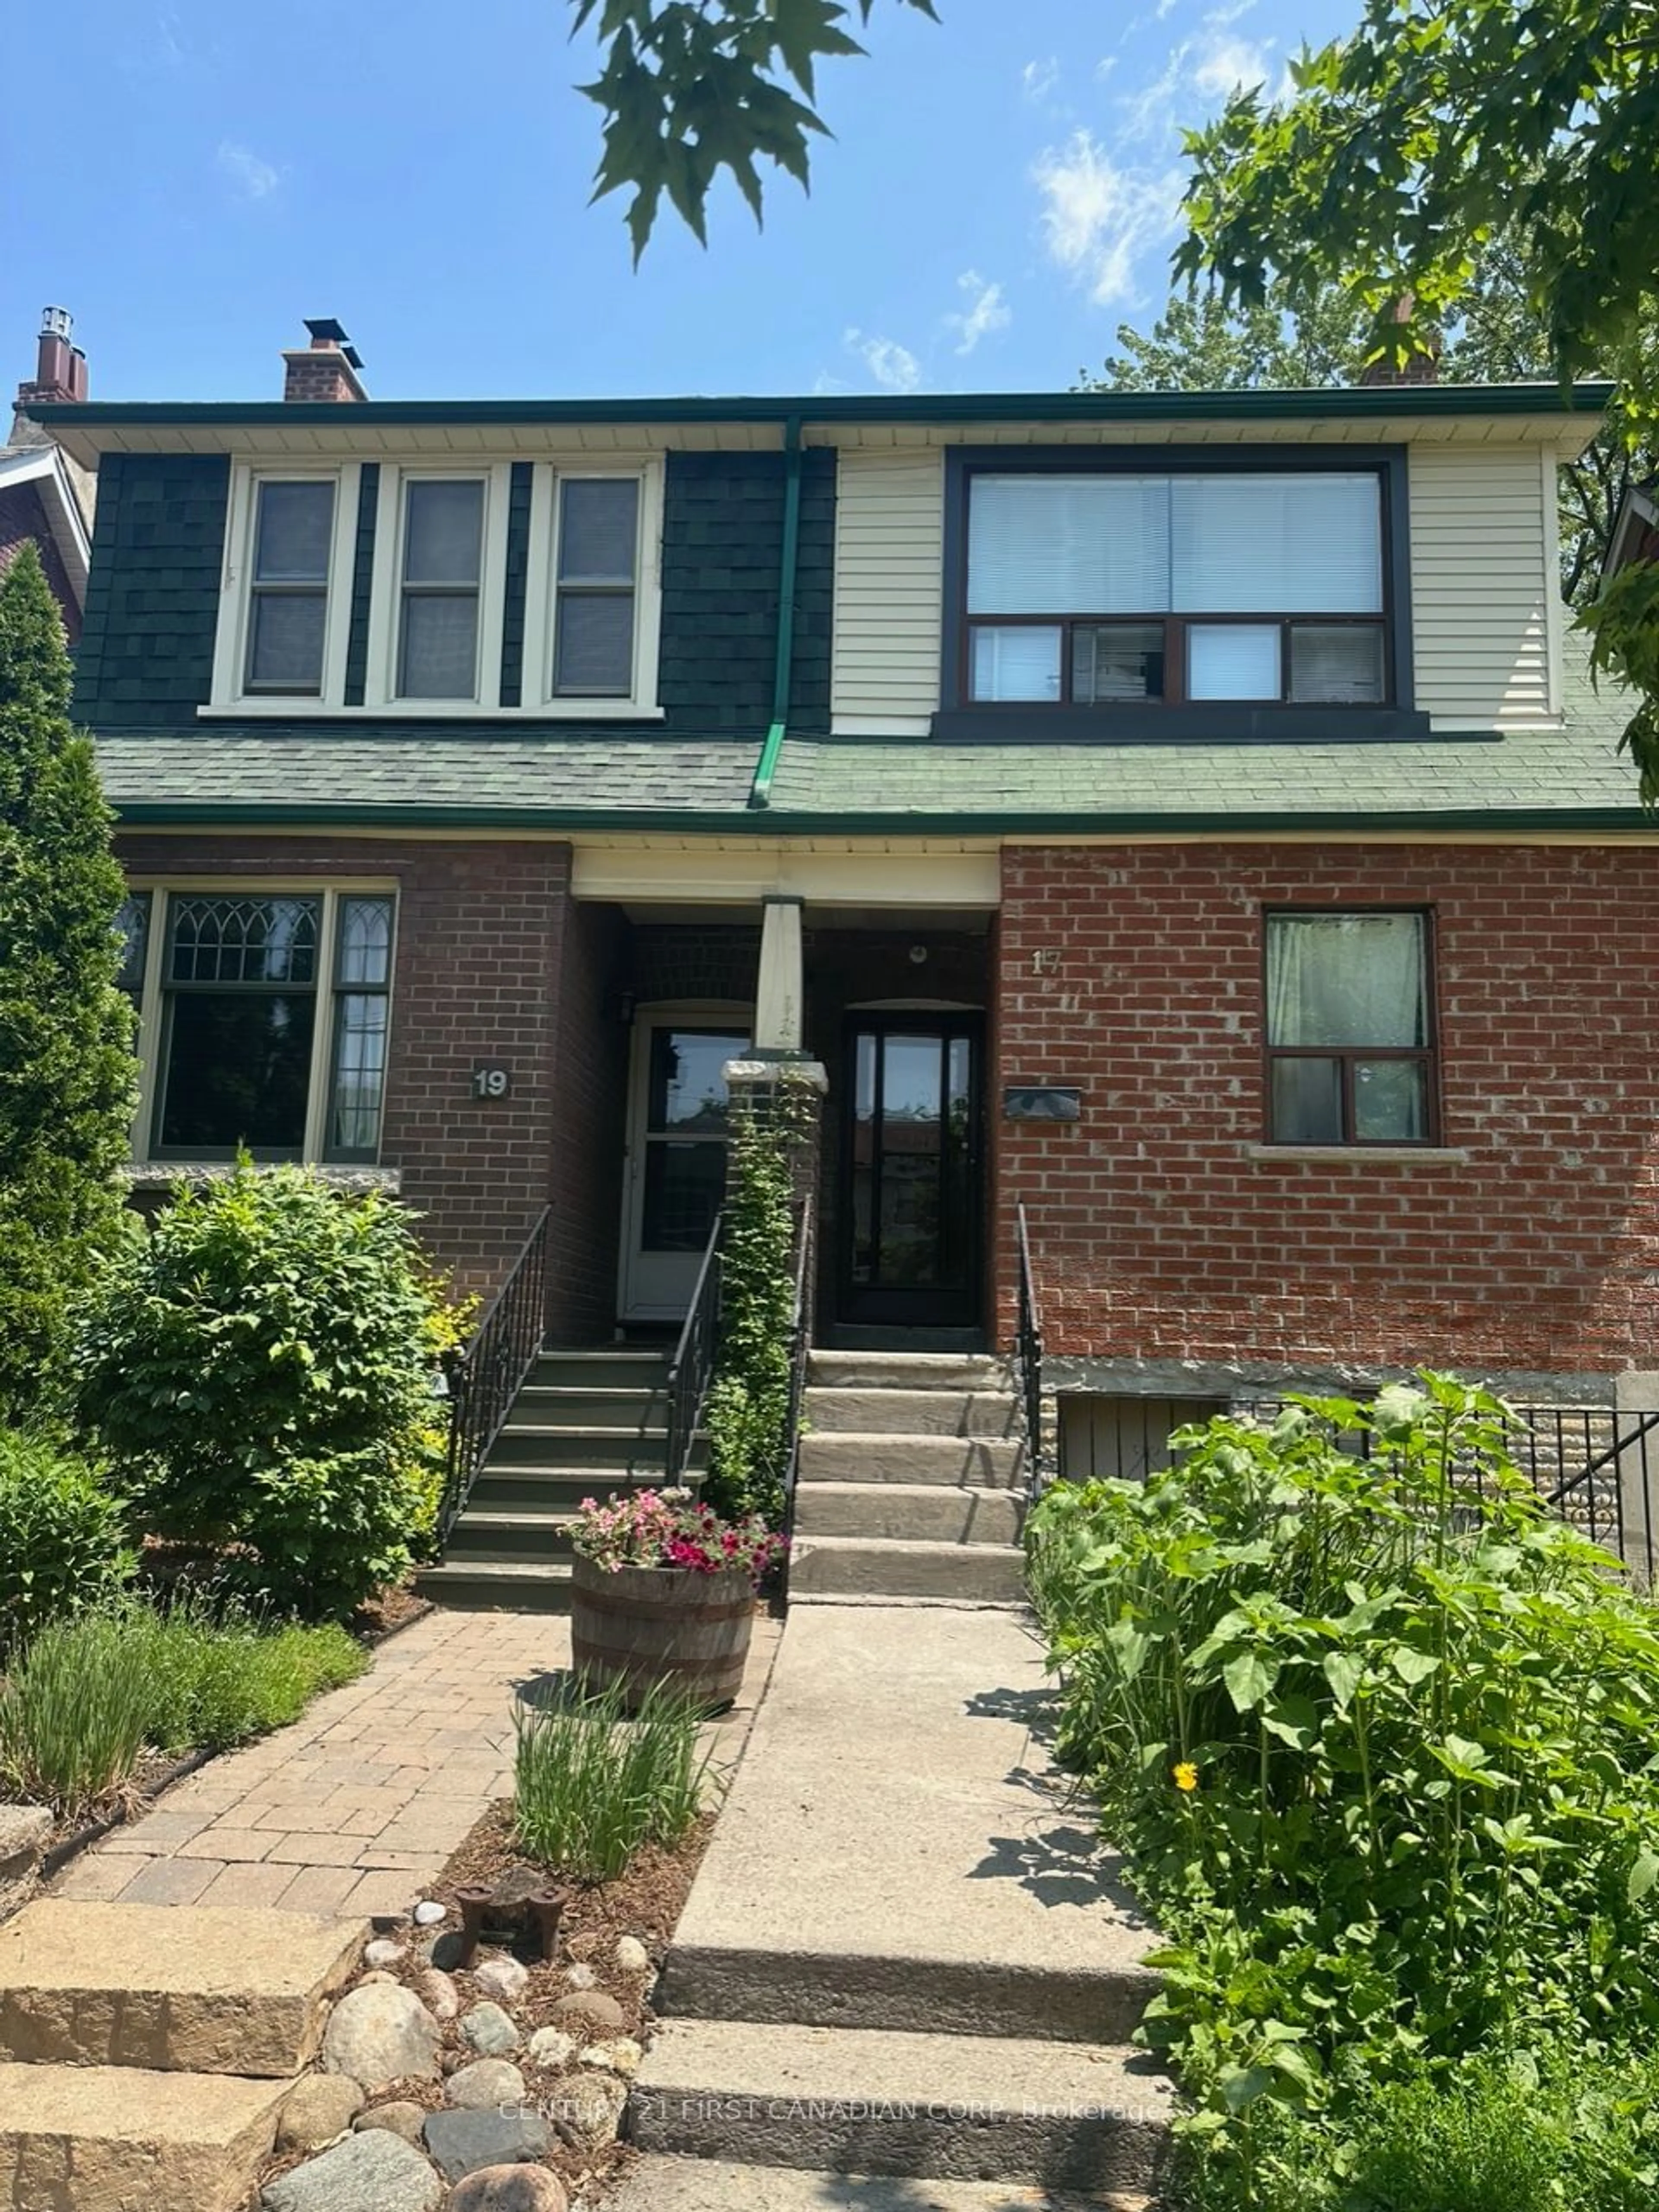 Home with brick exterior material for 17 Monarch Park Ave, Toronto Ontario M4J 4P9